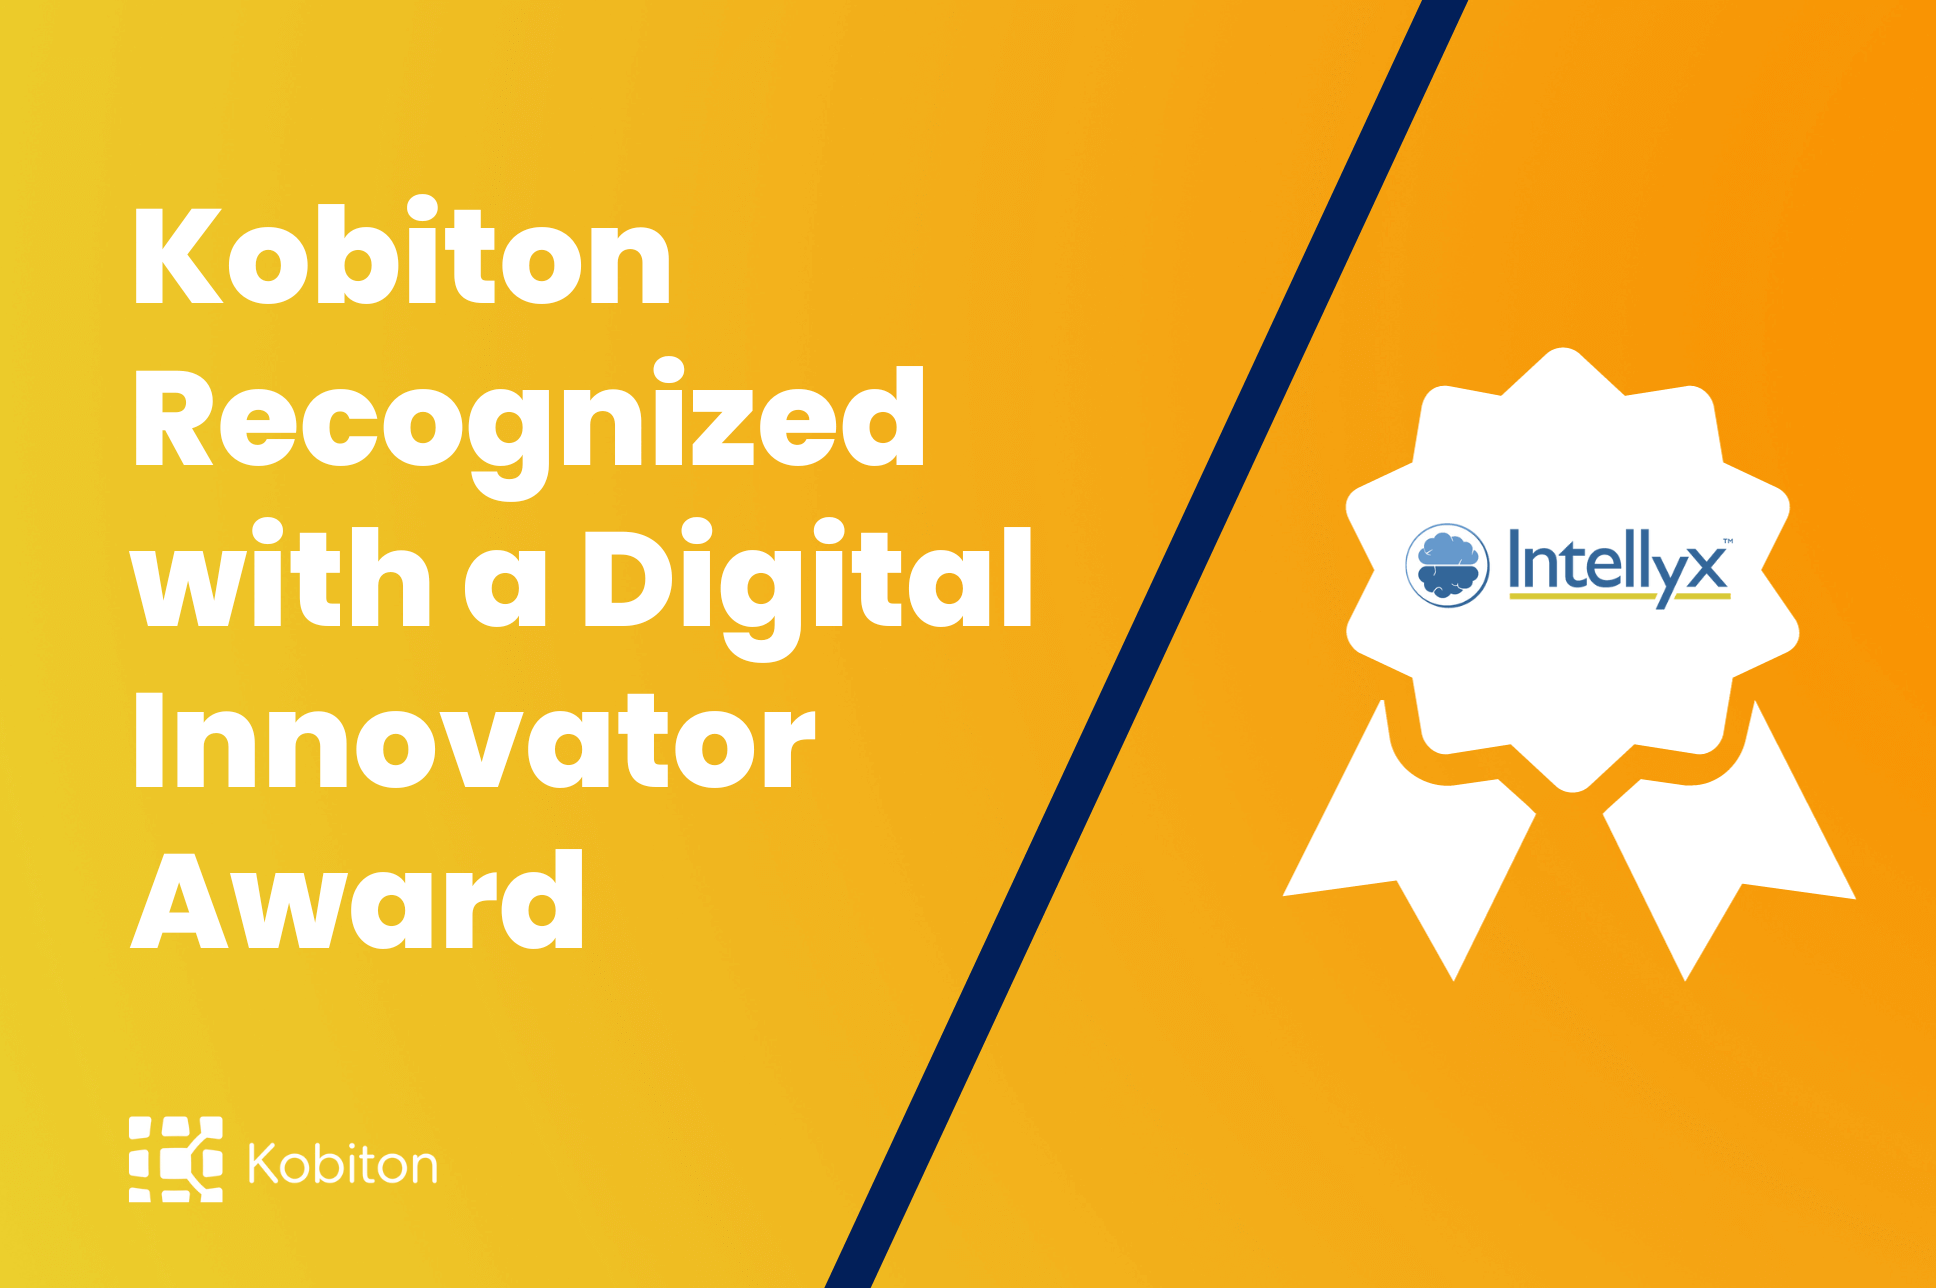 Kobiton recognized with a digital innovator award